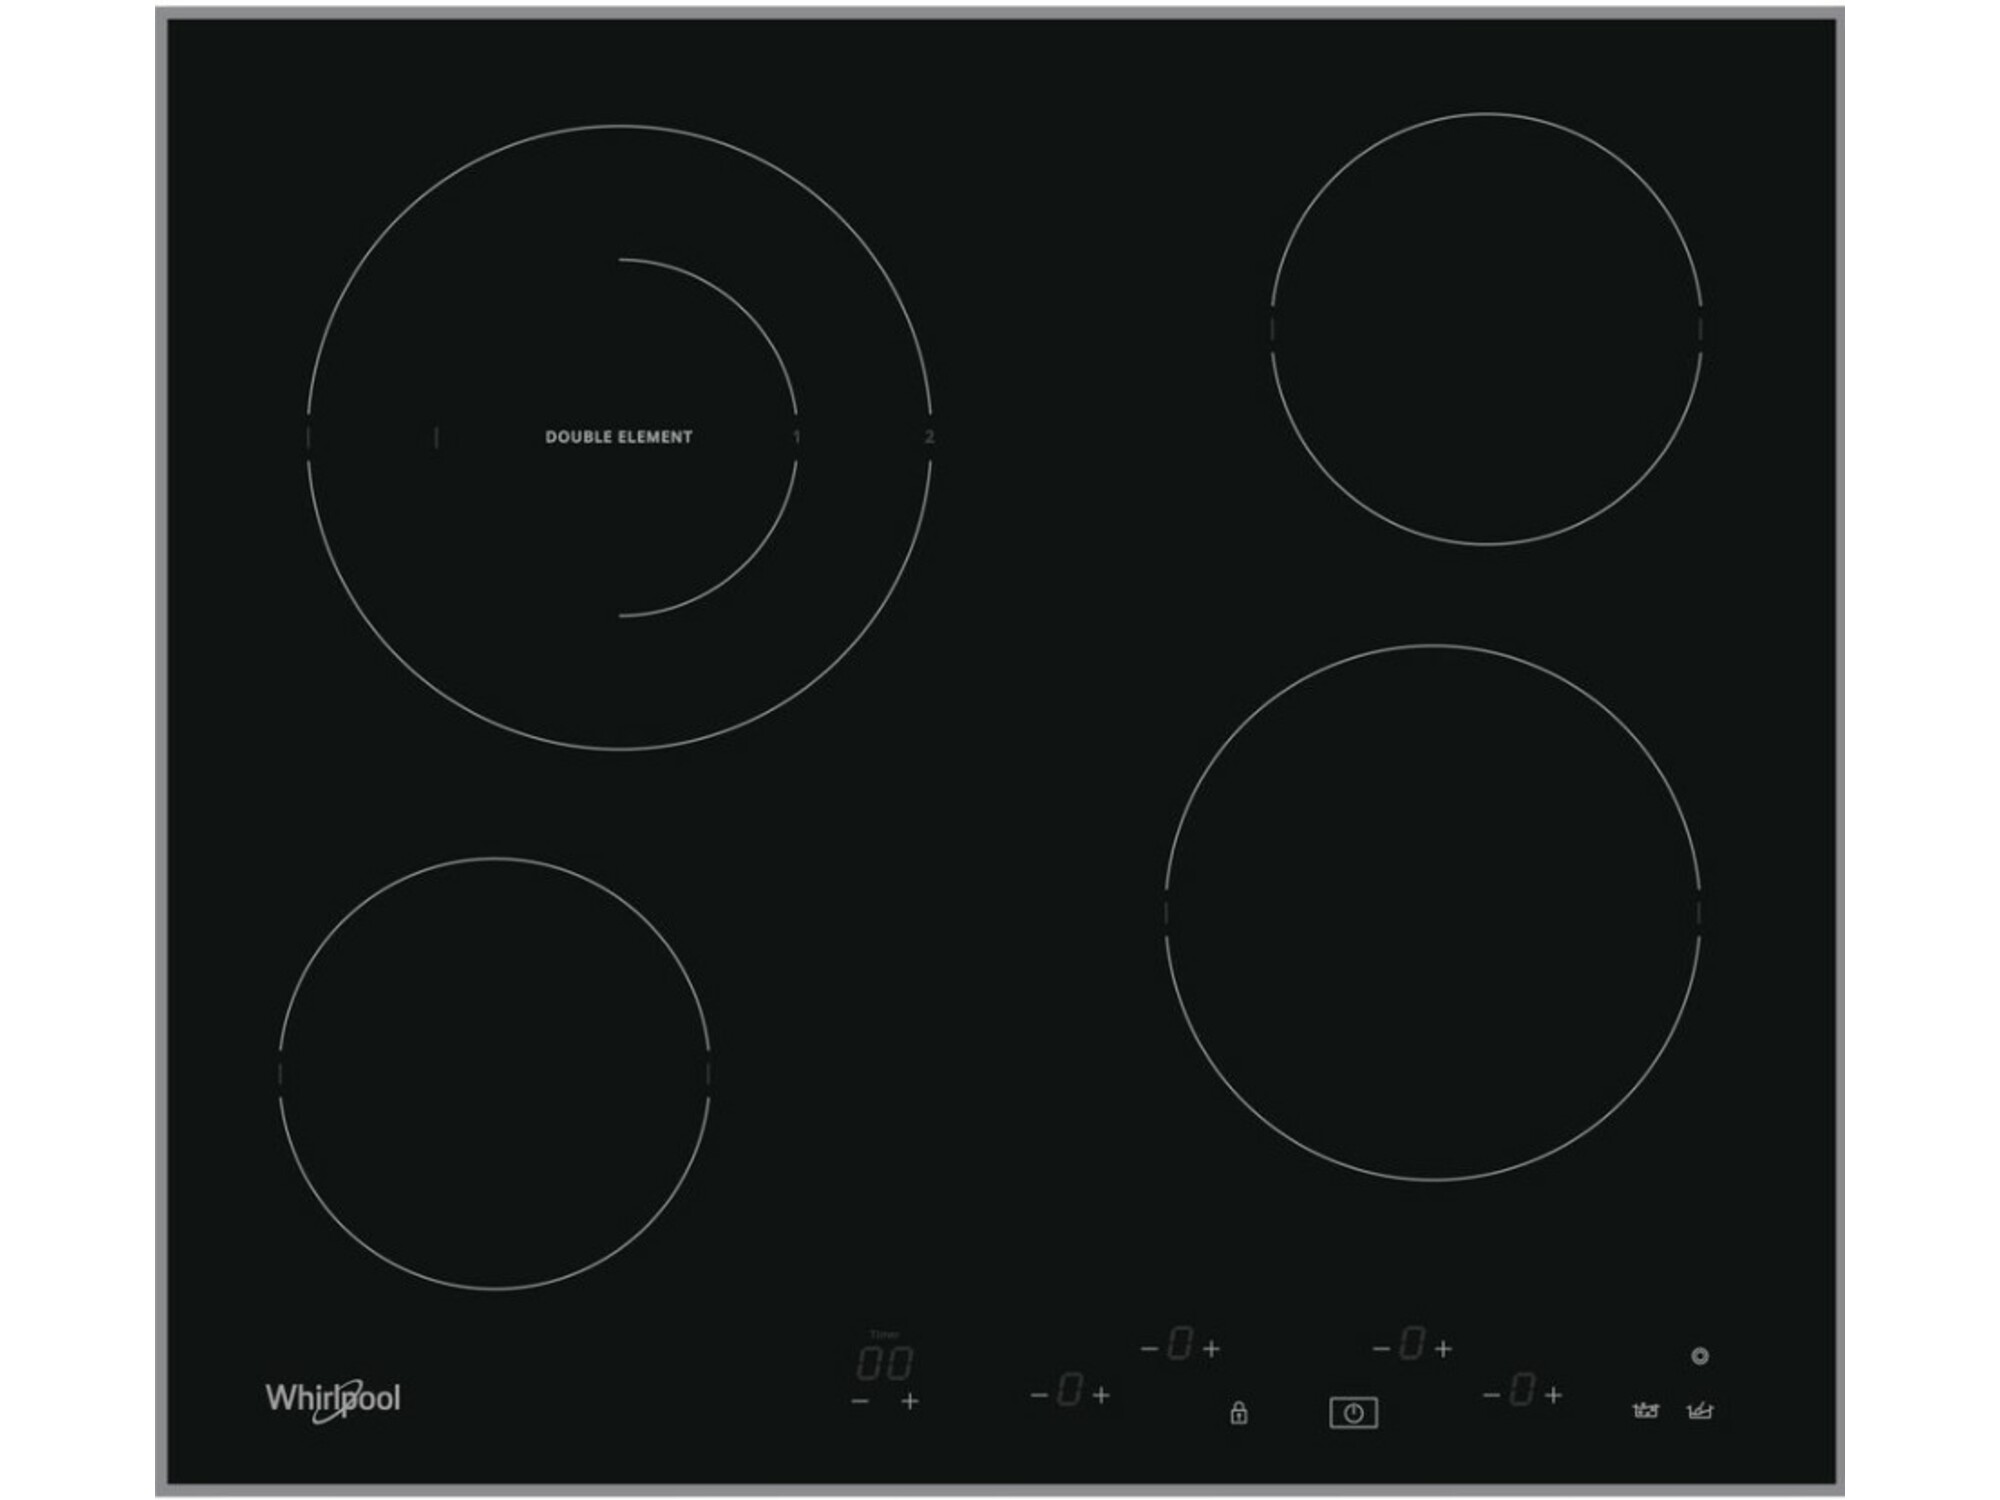 WHIRLPOOL steklokeramična kuhalna plošča AKT 8601 IX